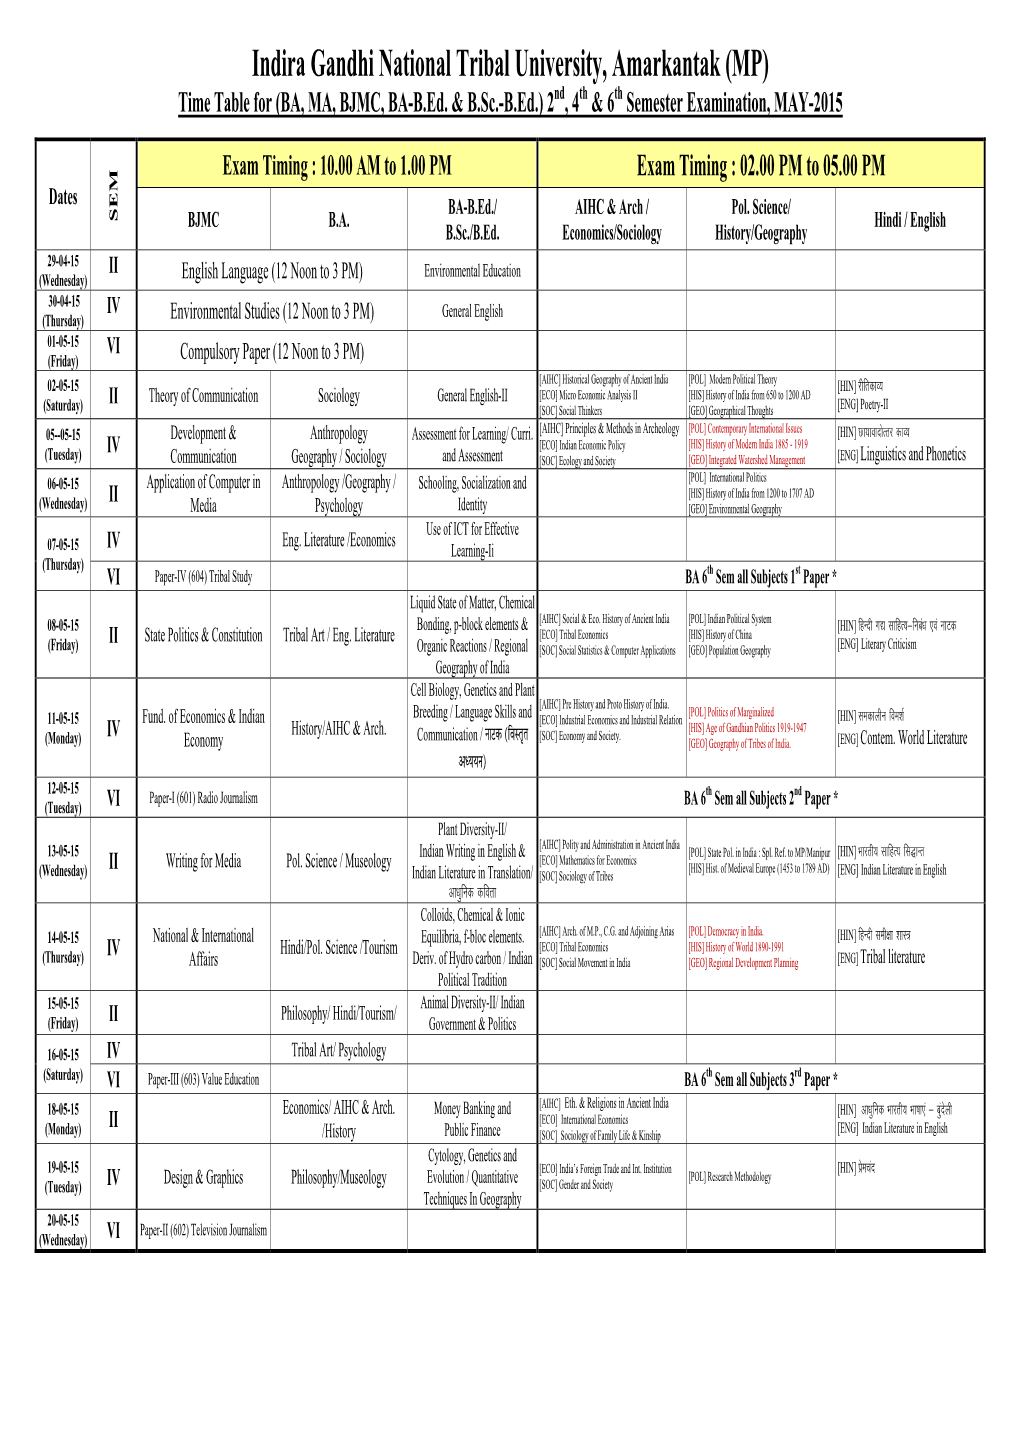 Indira Gandhi National Tribal University, Amarkantak (MP) Time Table for (BA, MA, BJMC, BA-B.Ed